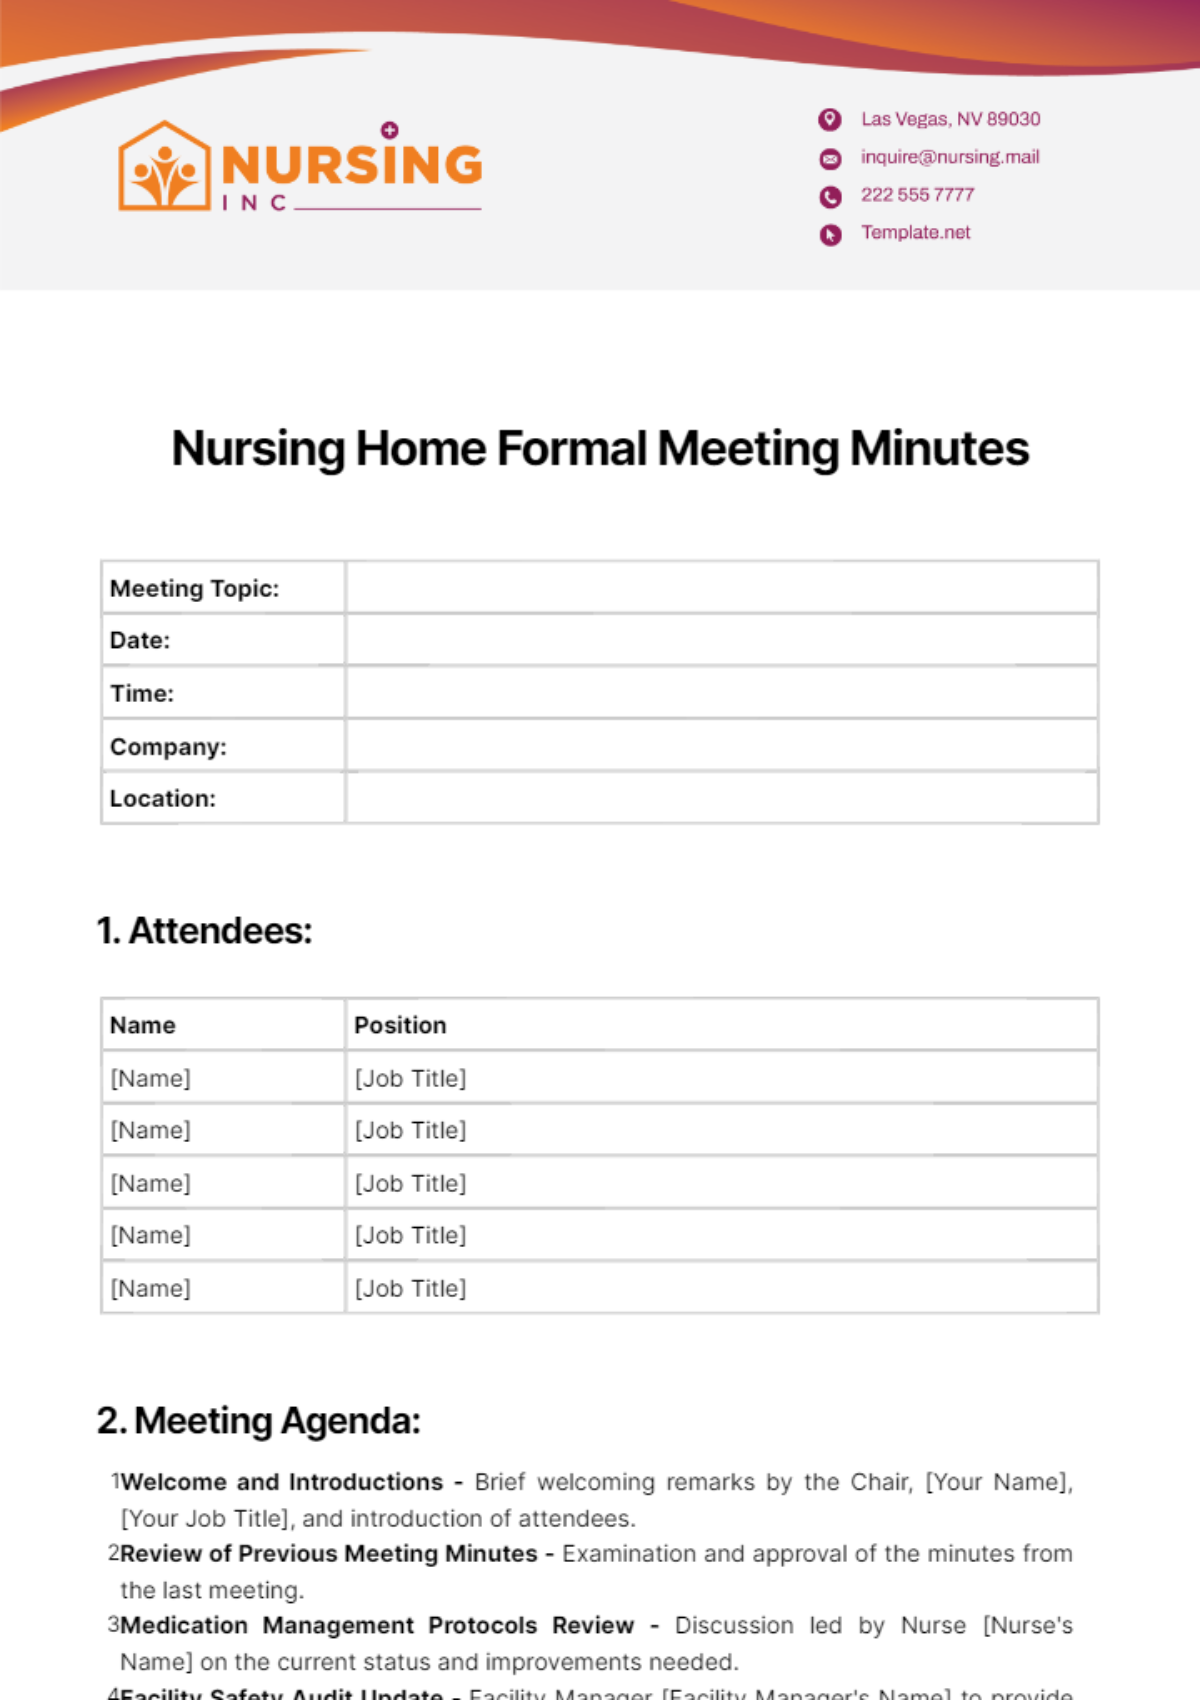 Nursing Home Formal Meeting Minutes Template